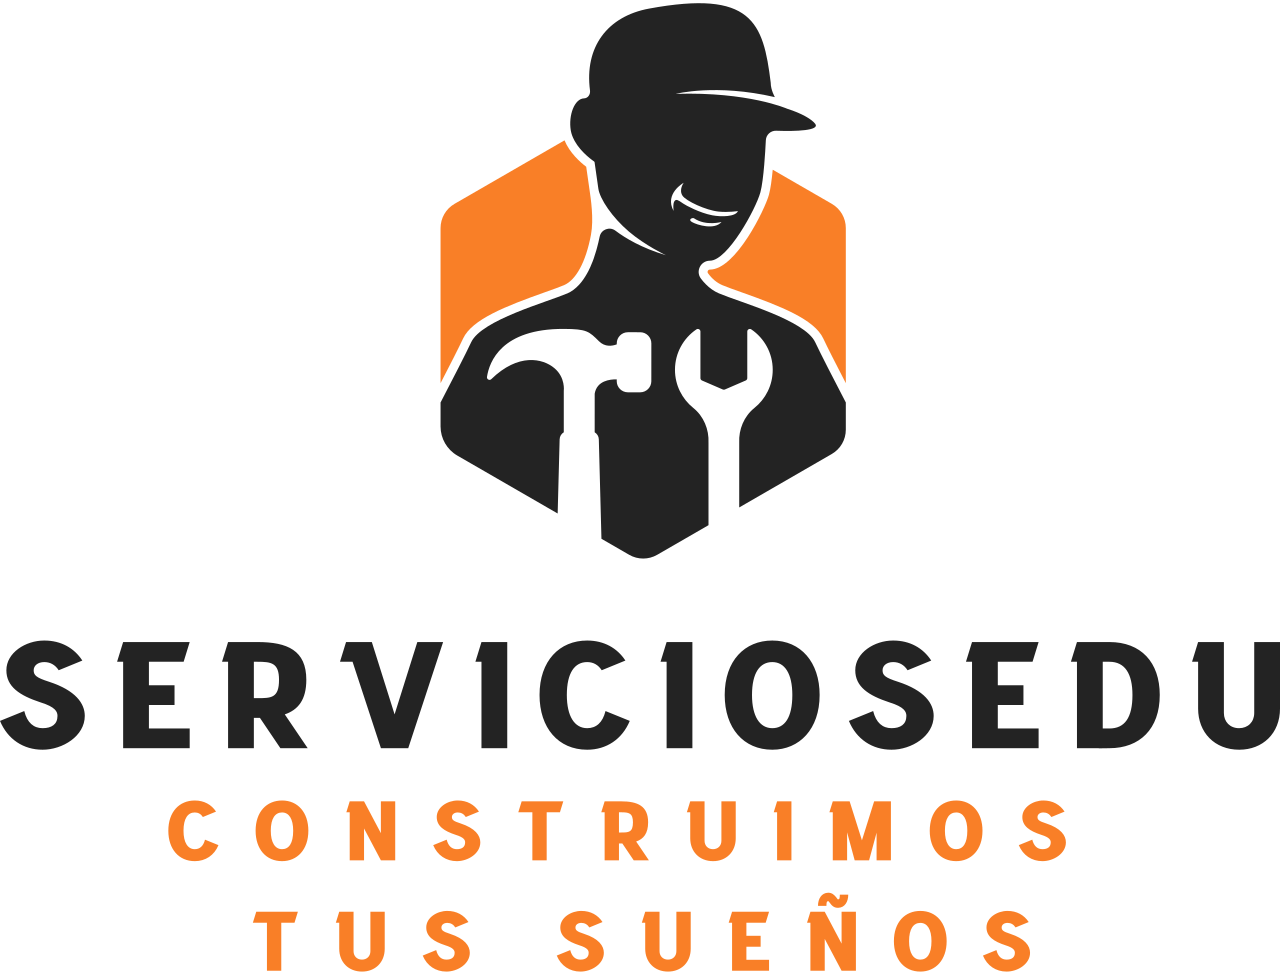 ServiciosEdu's logo